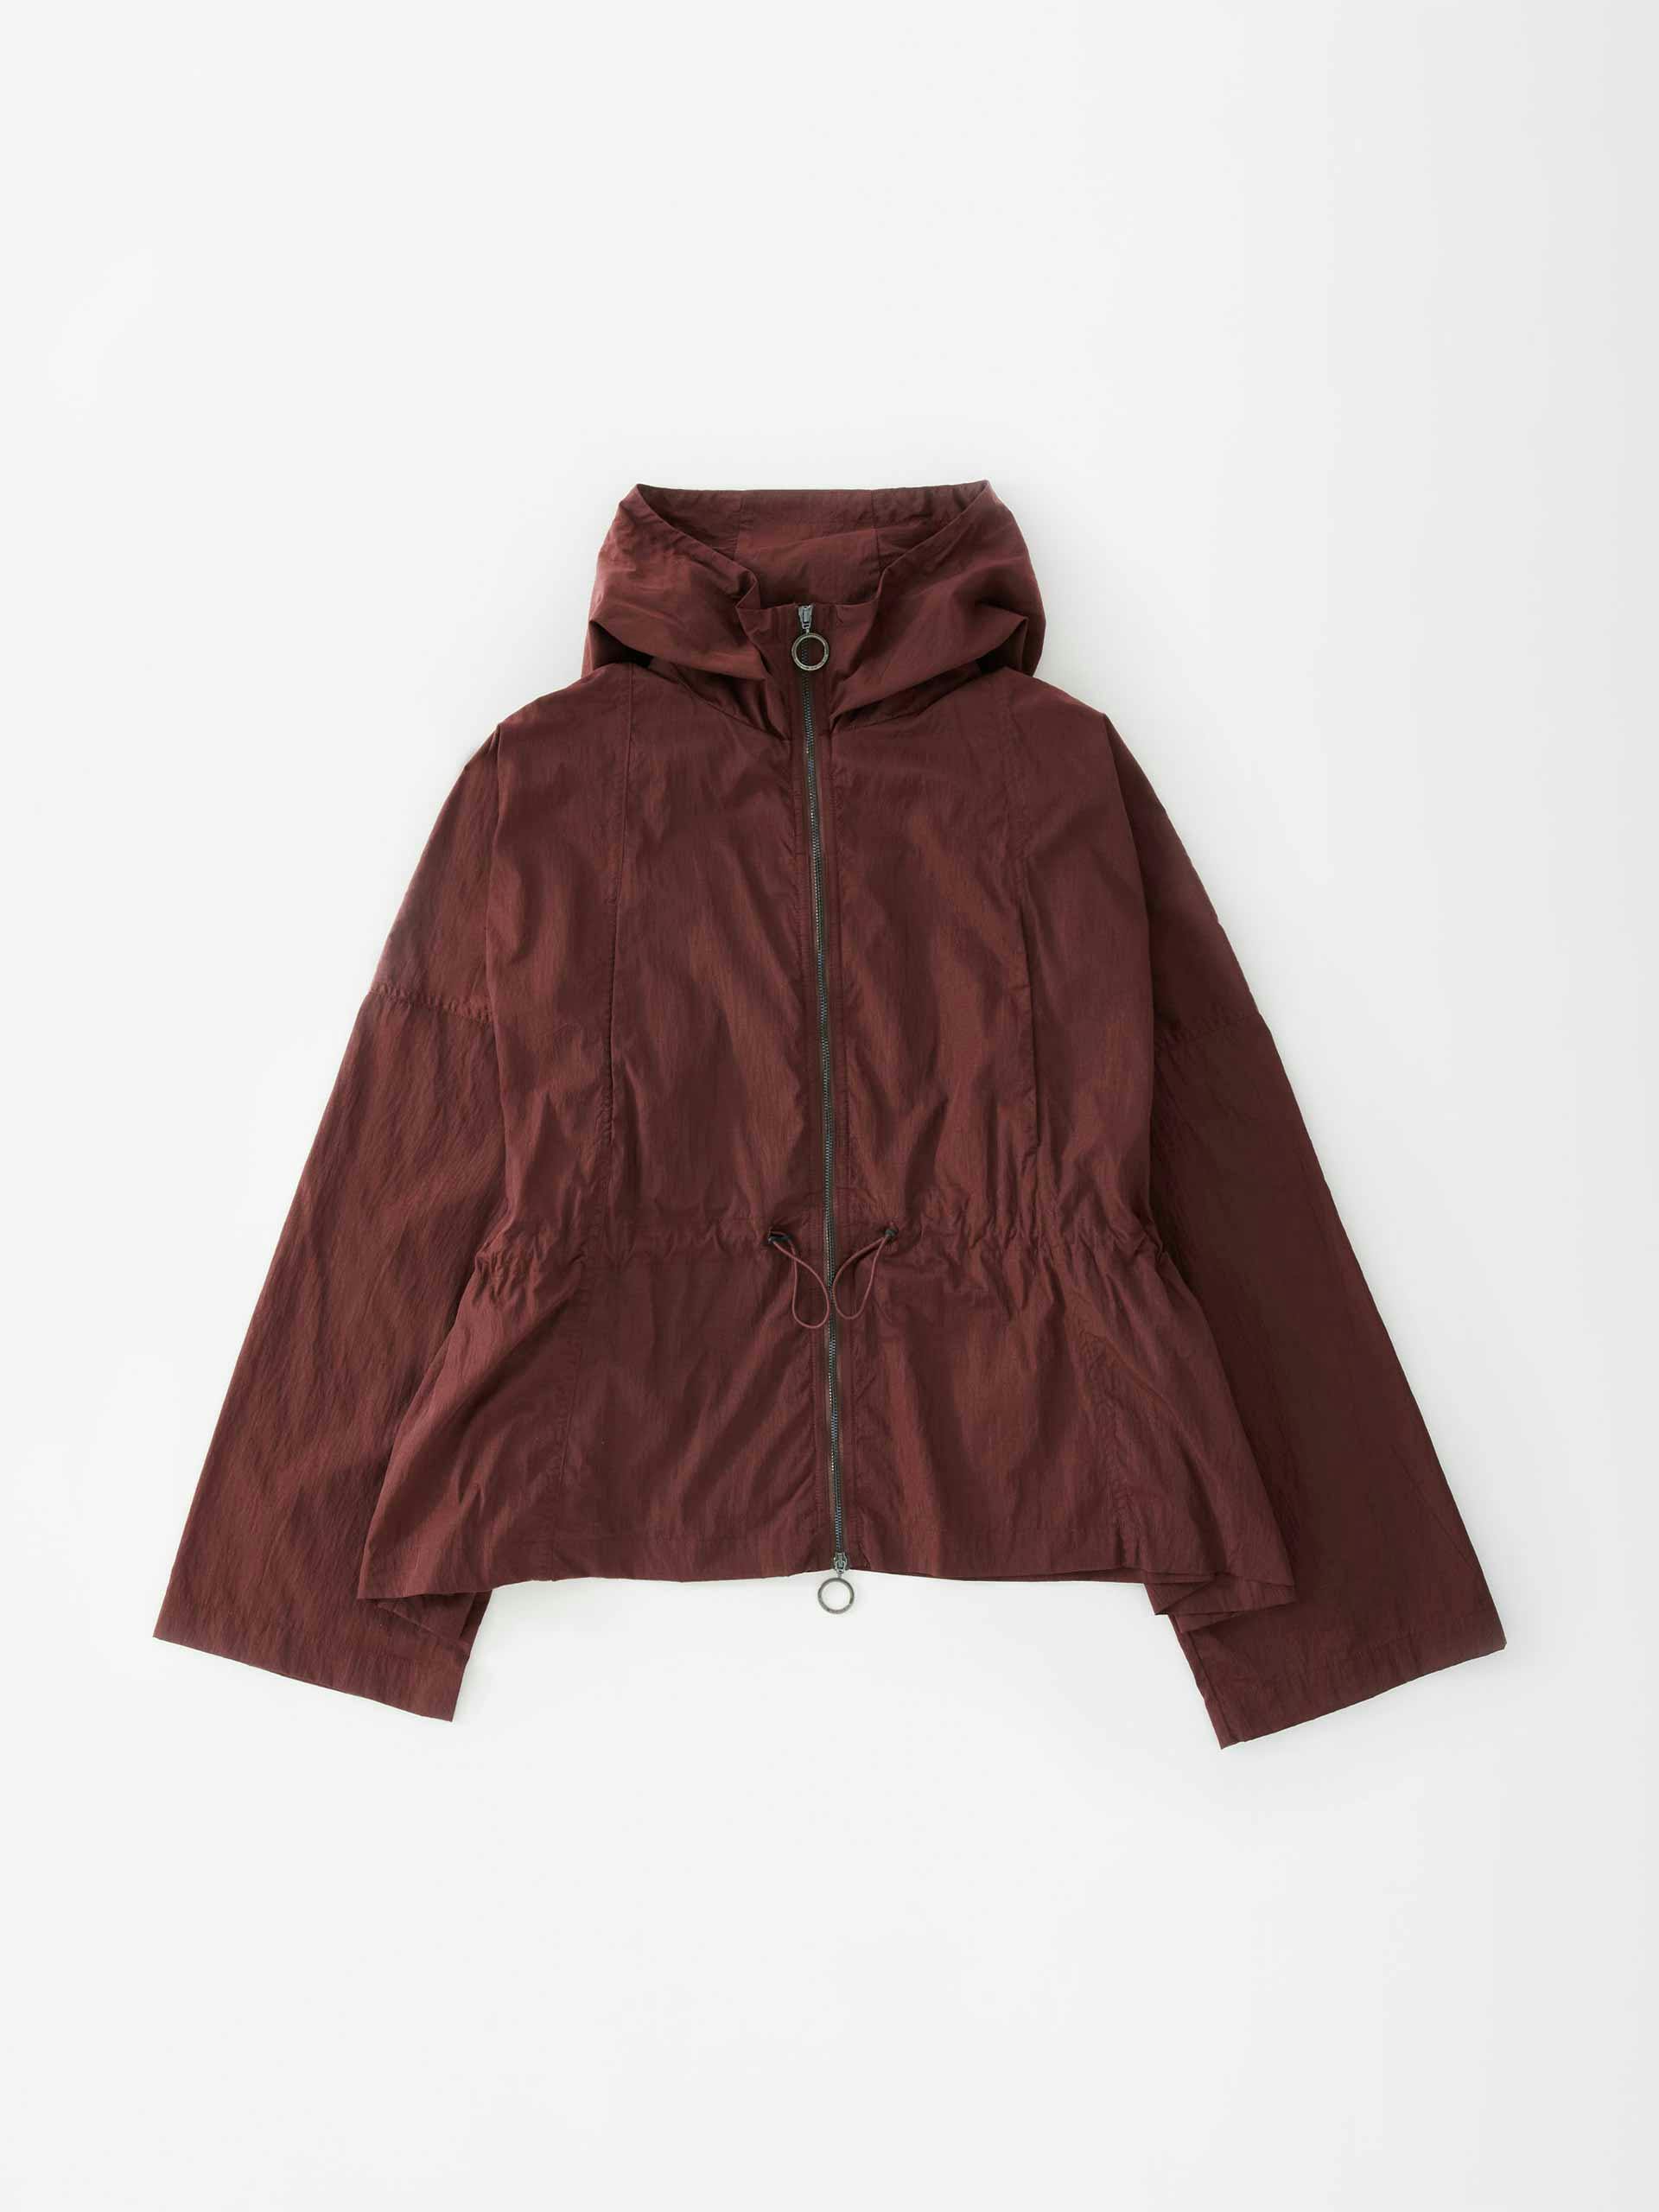 Burgundy hooded jacket